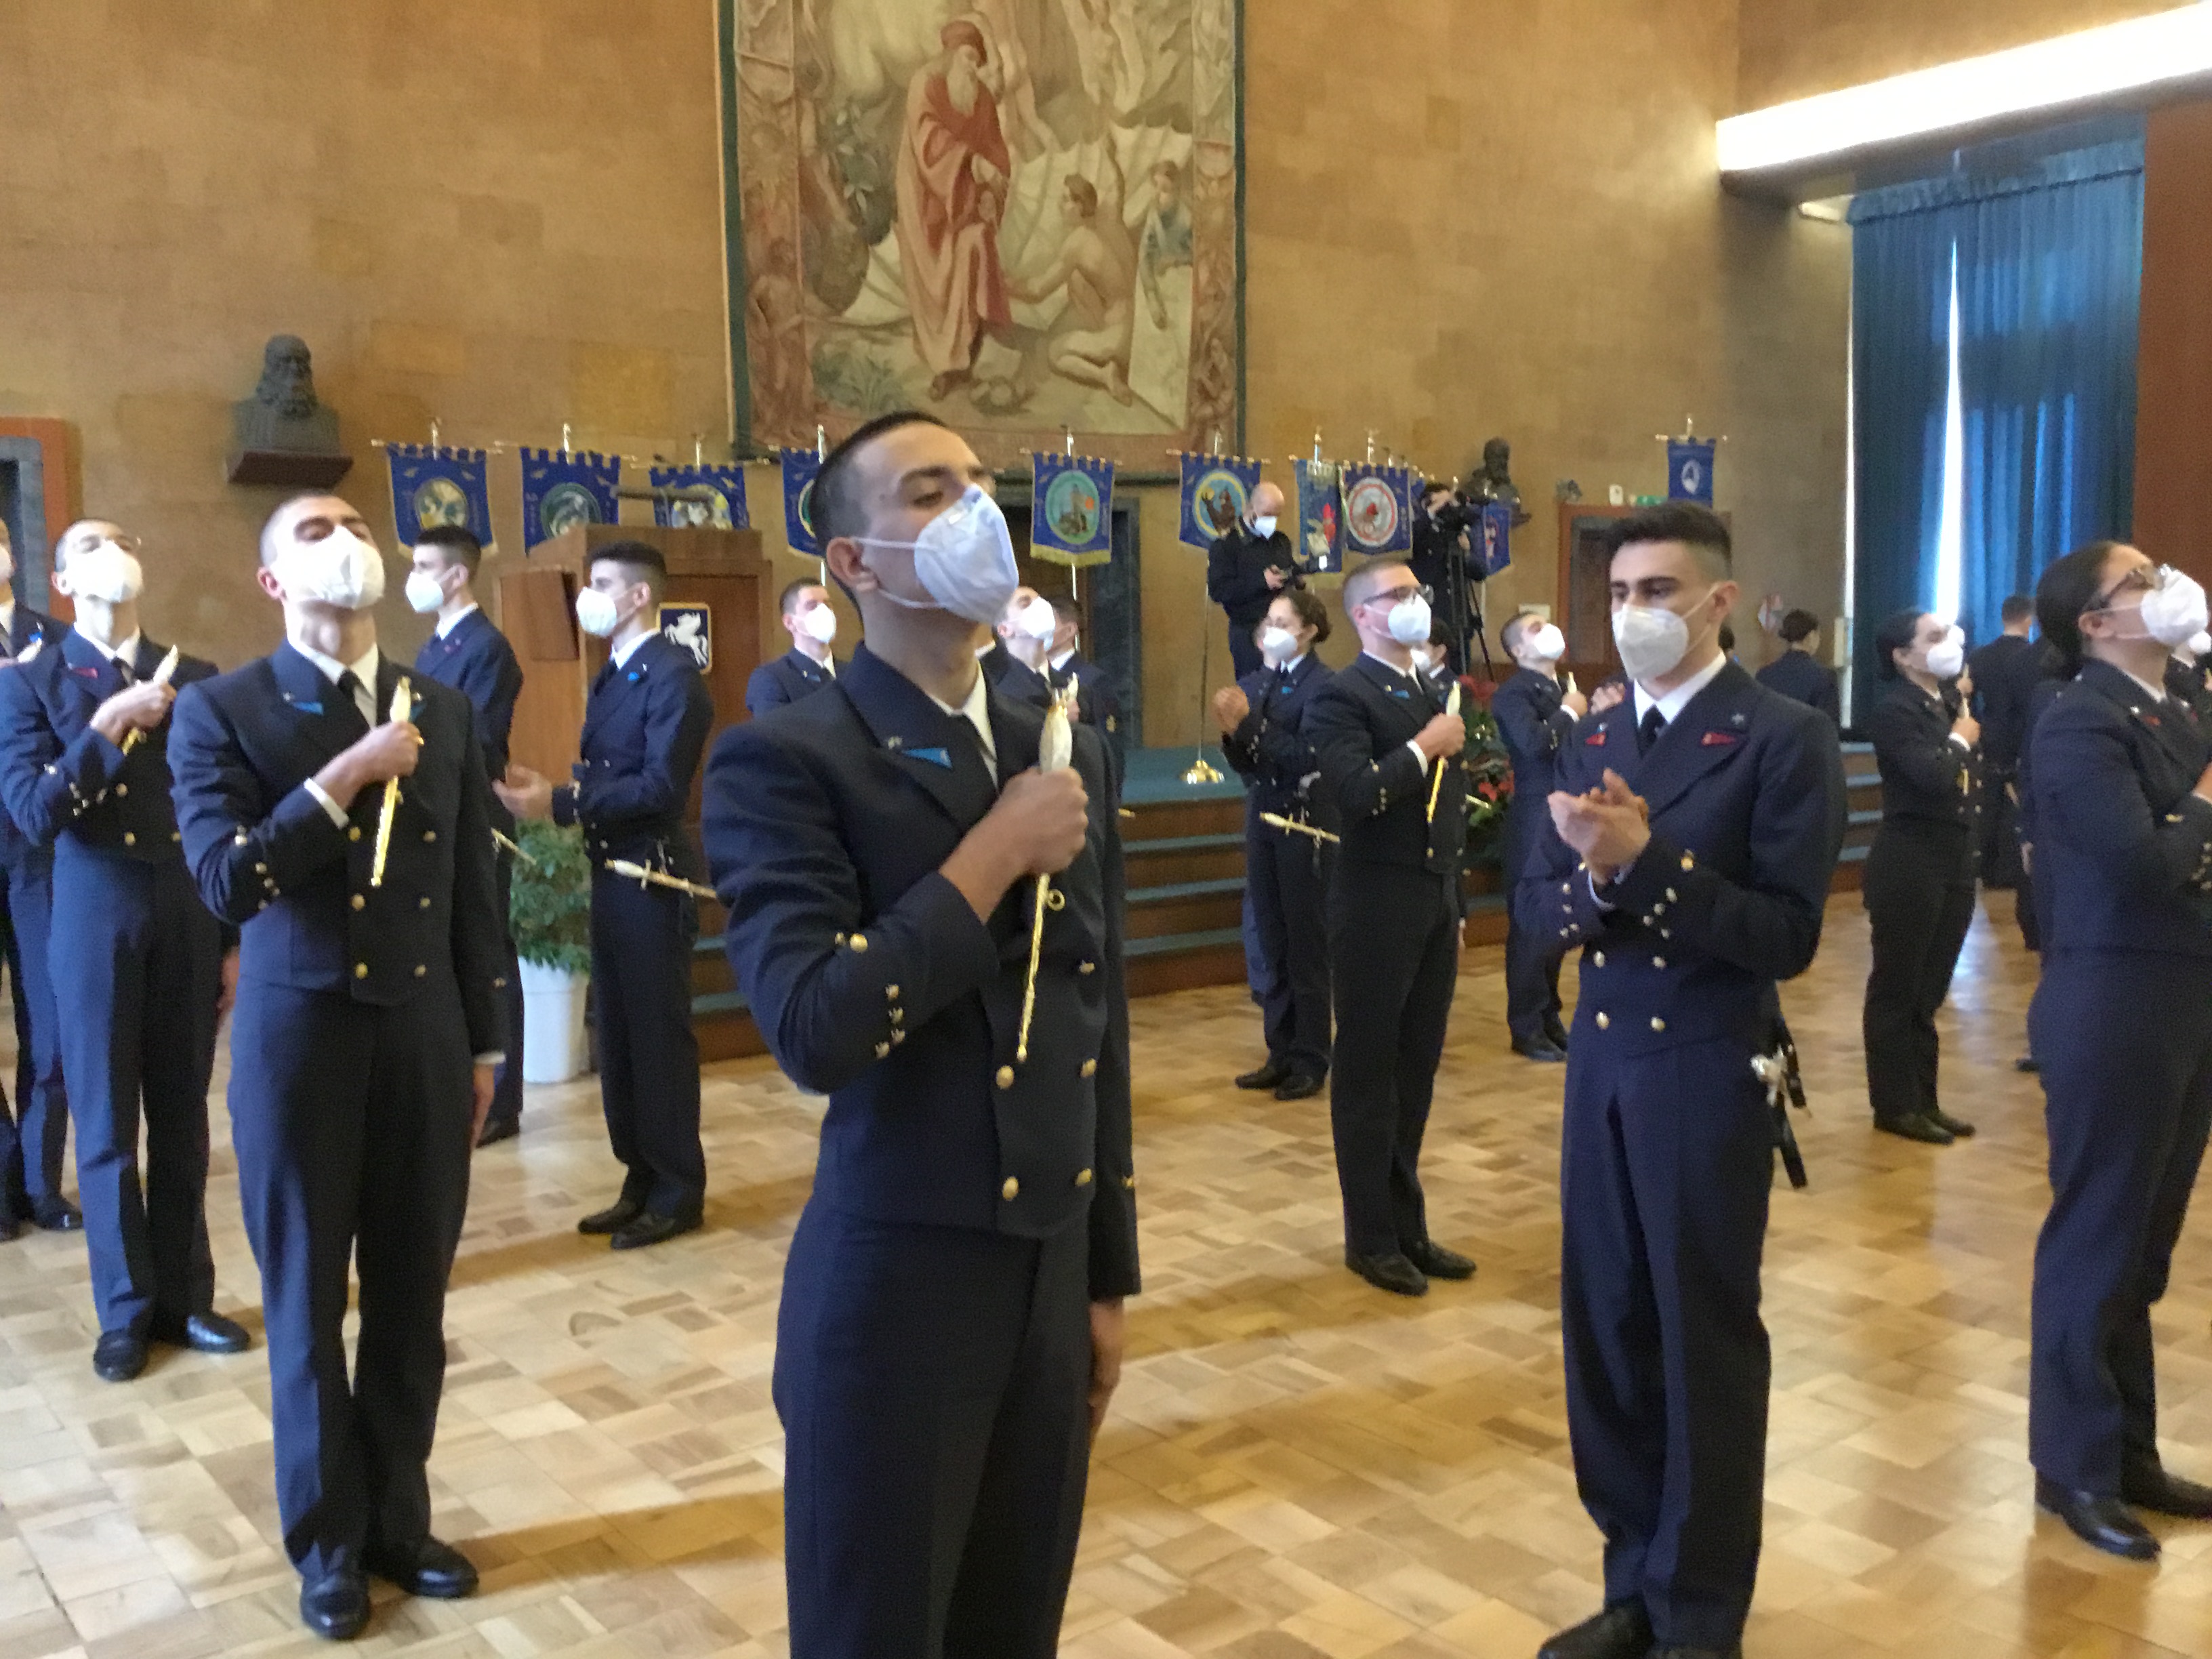 Cerimonia spadino Scuola Guerra Aerea Firenze feb 2021 (6)